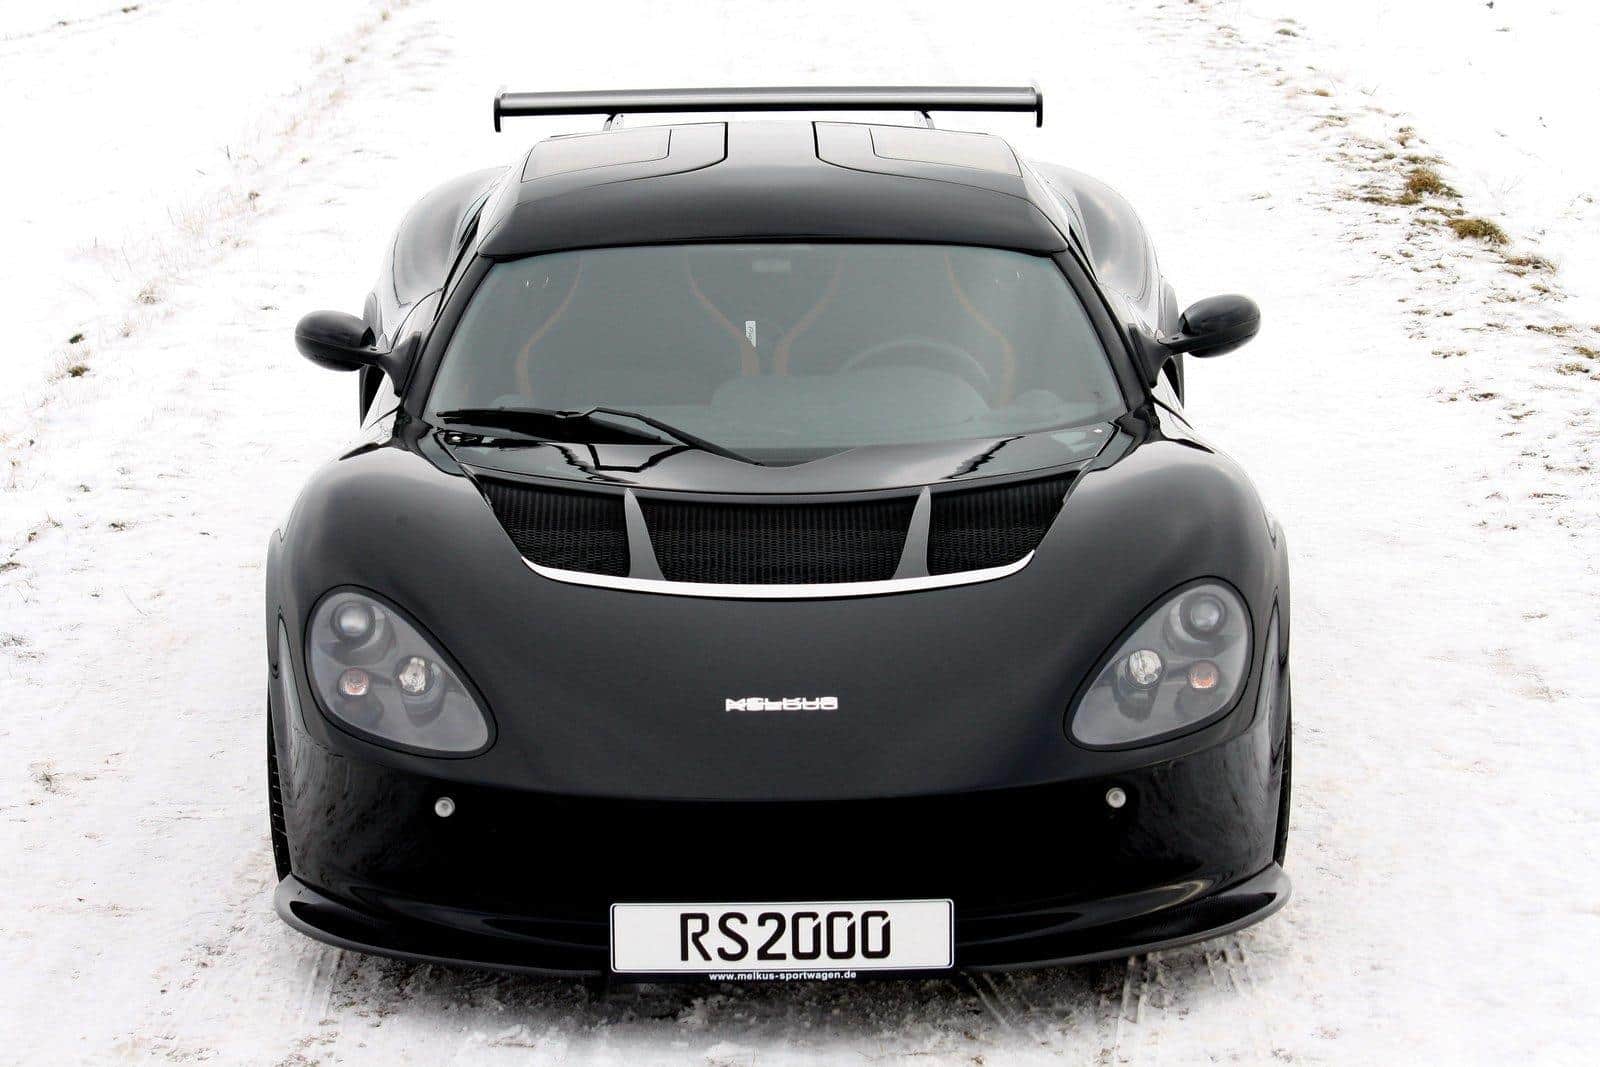 Melkus RS2000 Black Edition 3